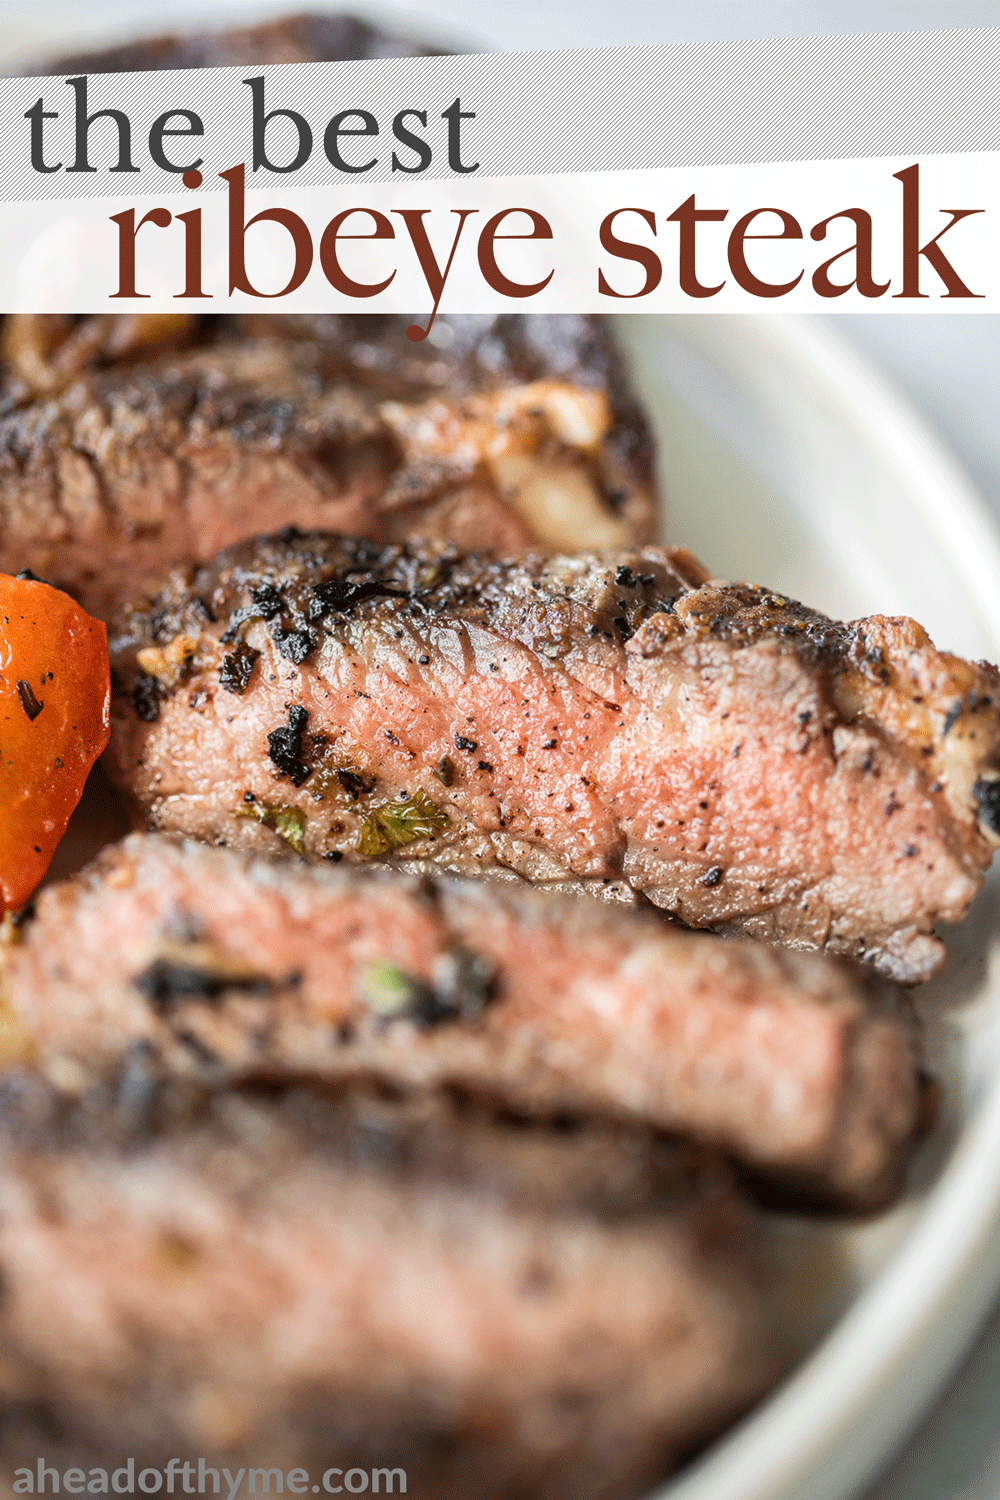 The Best Ribeye Steak